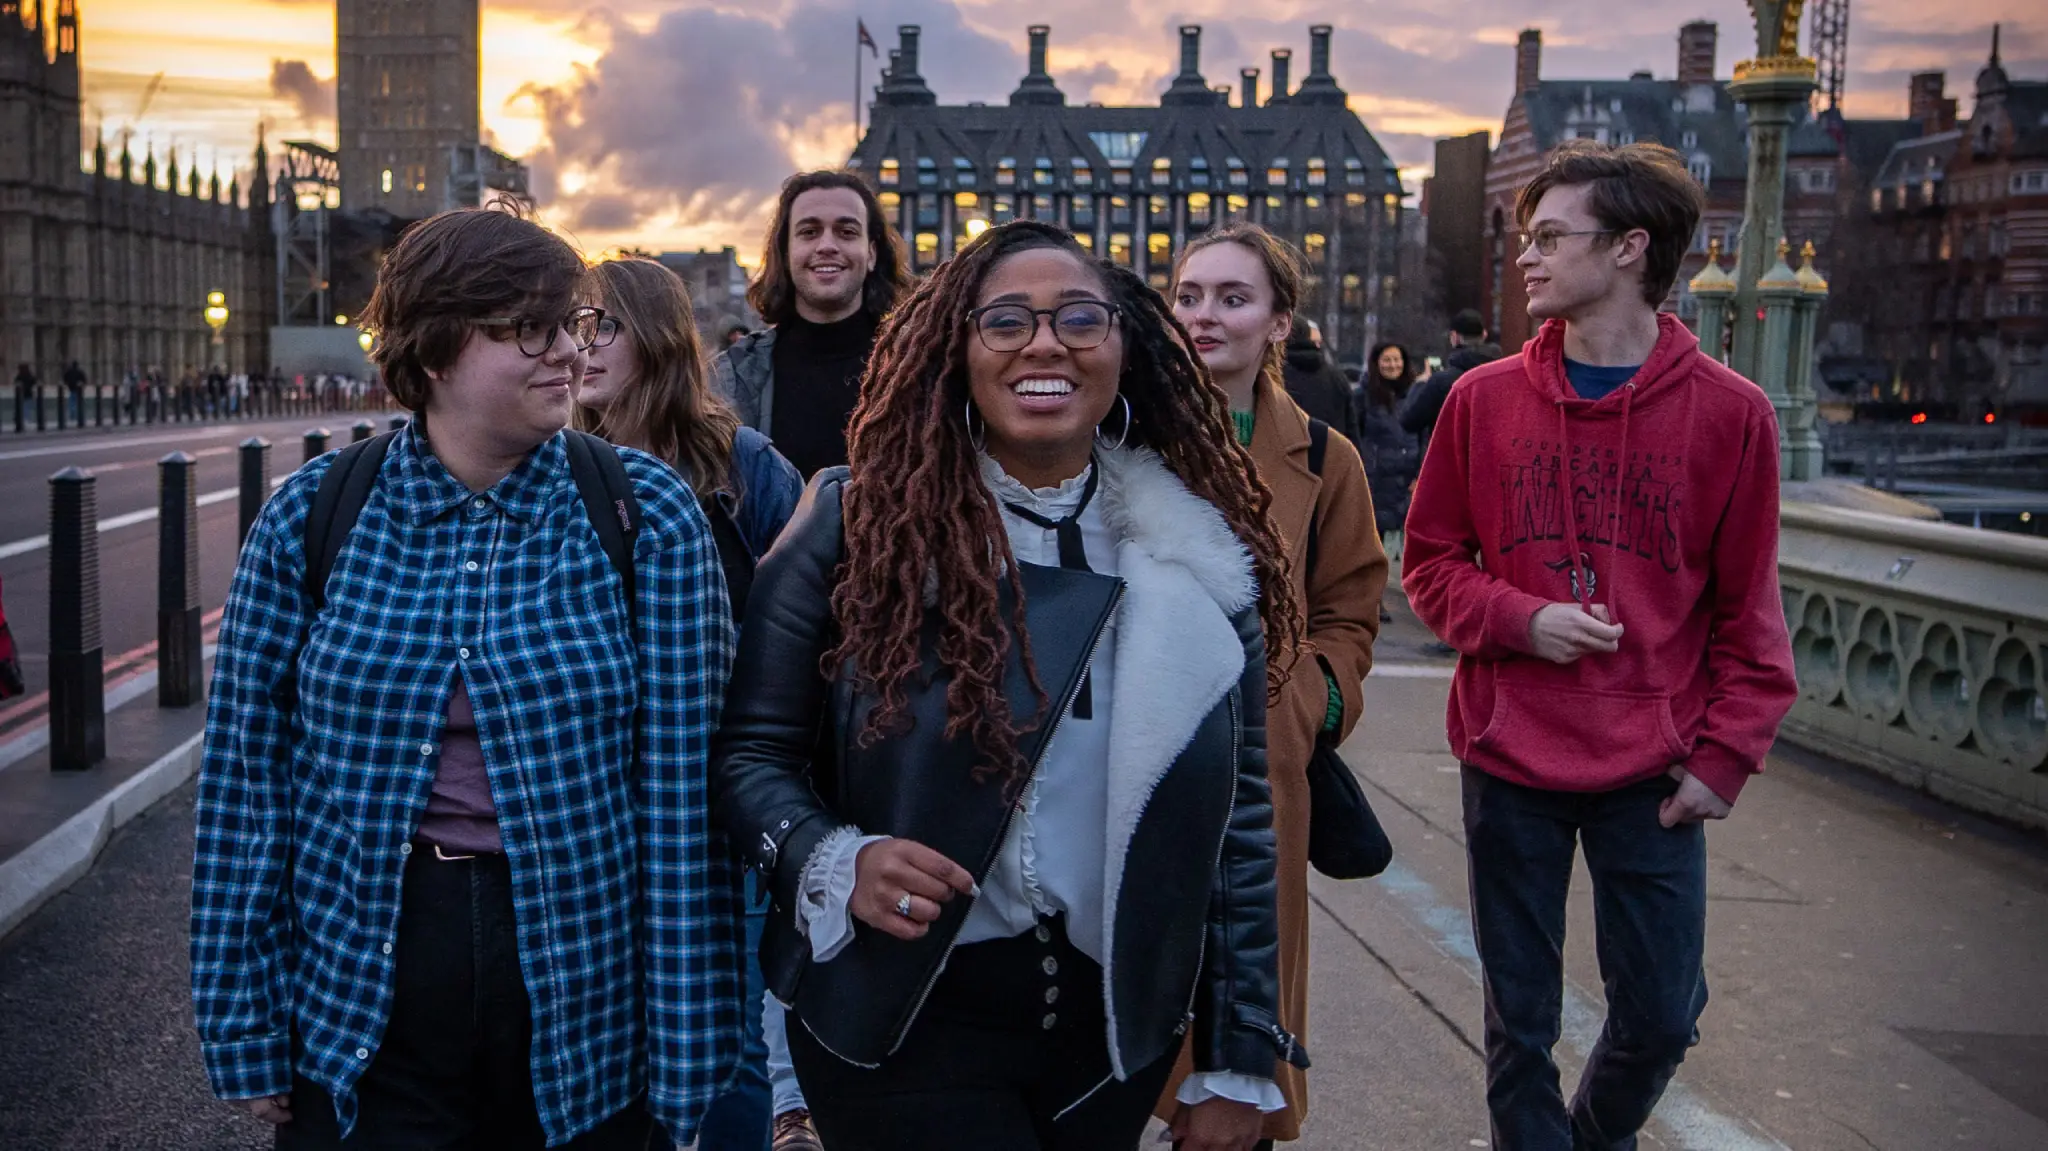 Arcadia students visit a European city and walk over a bridge.